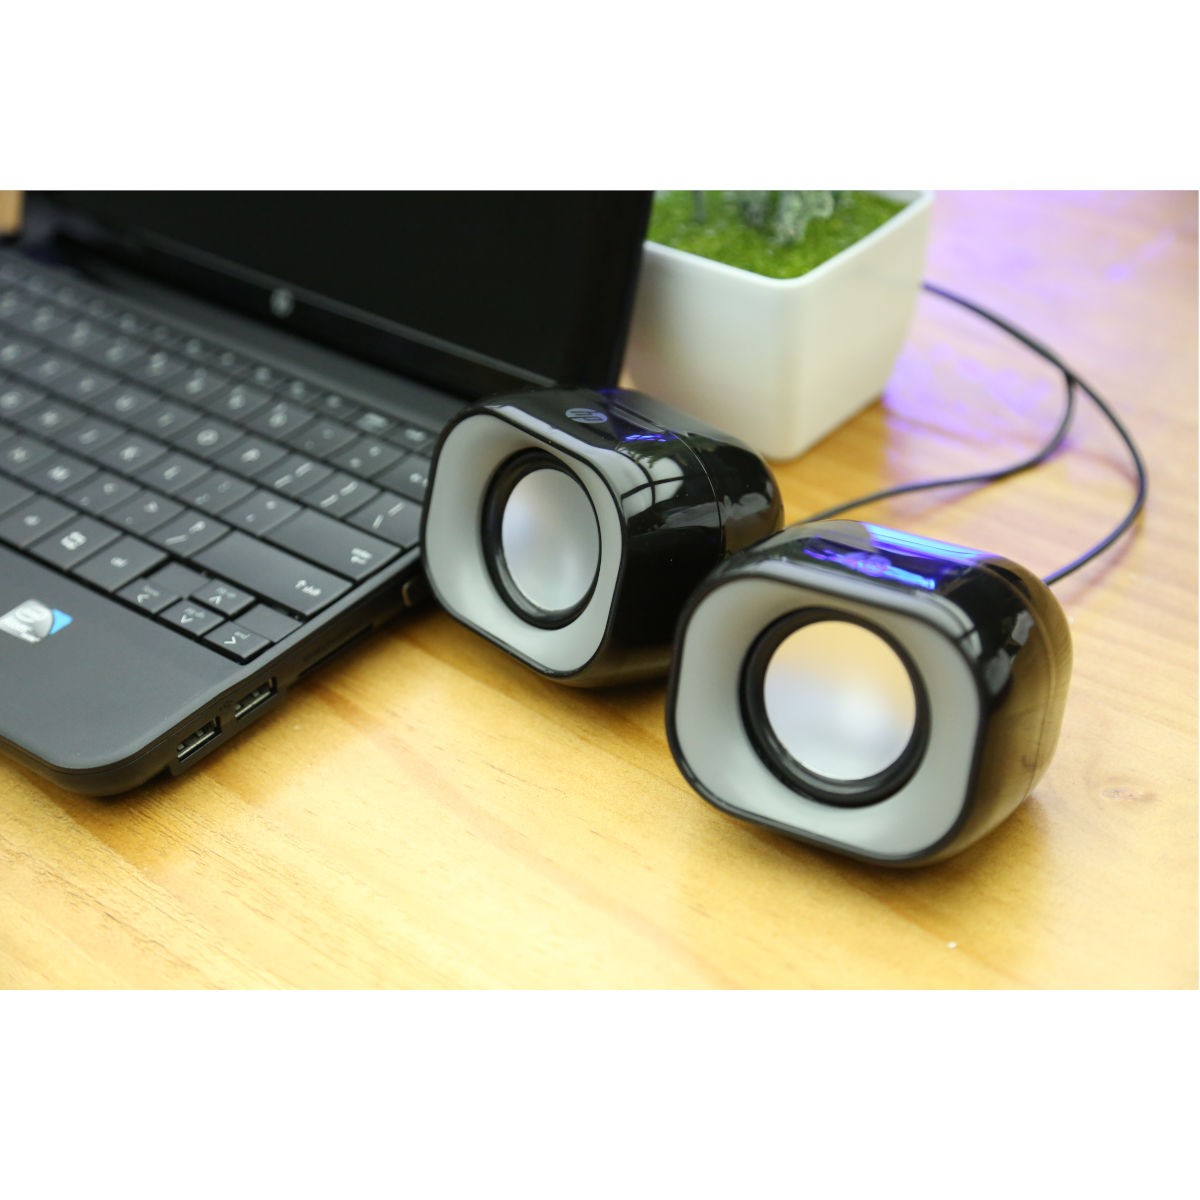 HP-DHS2111-Multimedia-Speaker-Mini-USB-Stereo-Surround-Sound-Three-band-Equalization-Desktop-Speaker-1838279-7